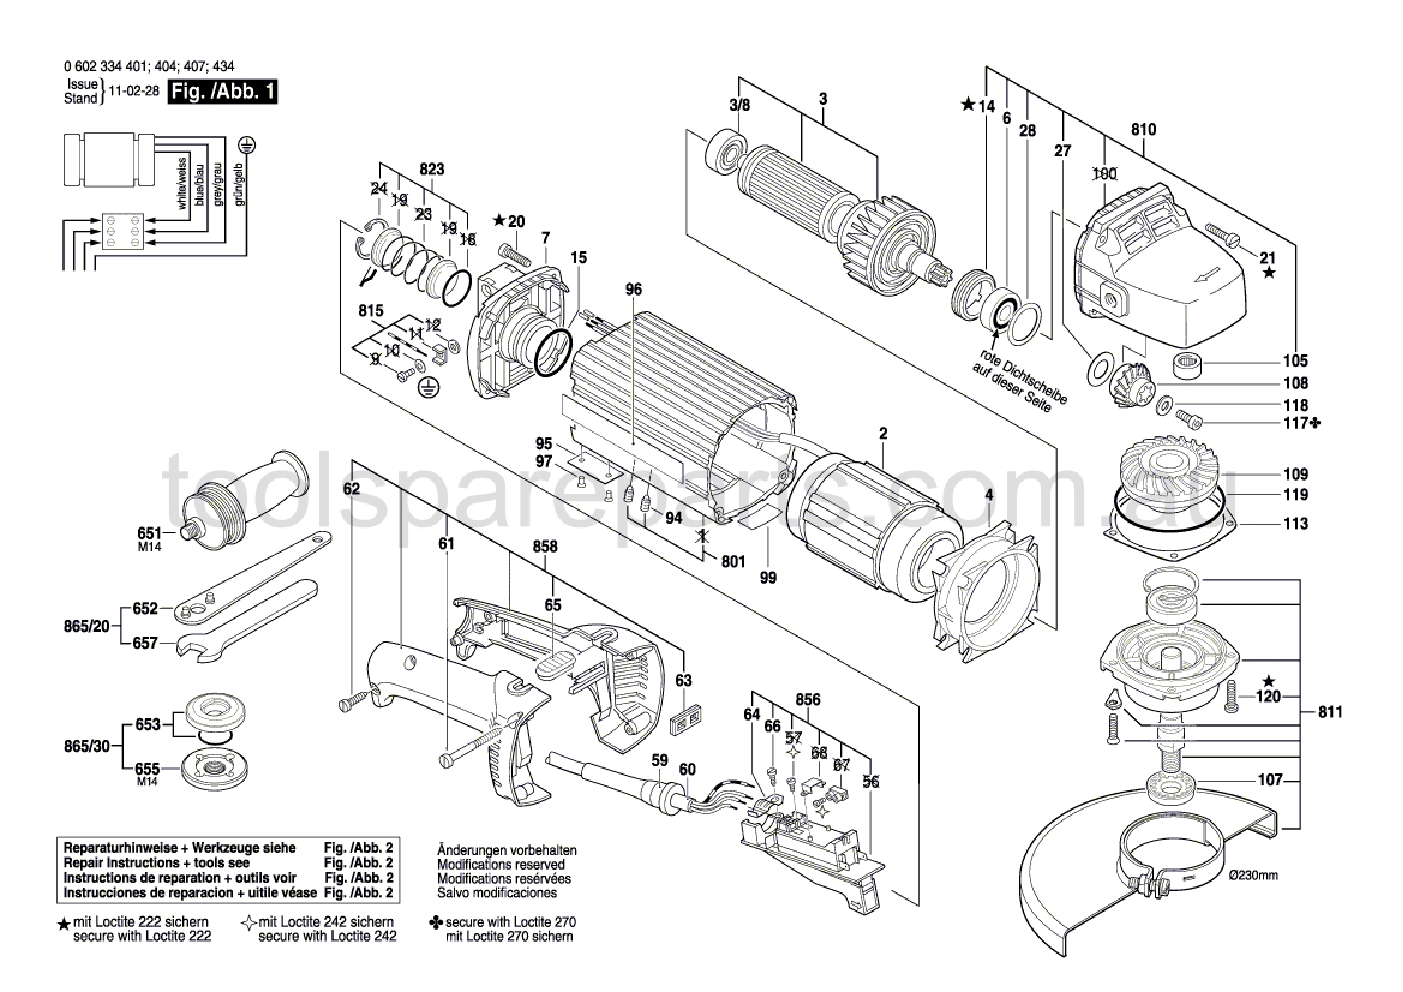 Bosch ---- 0602334404  Diagram 1